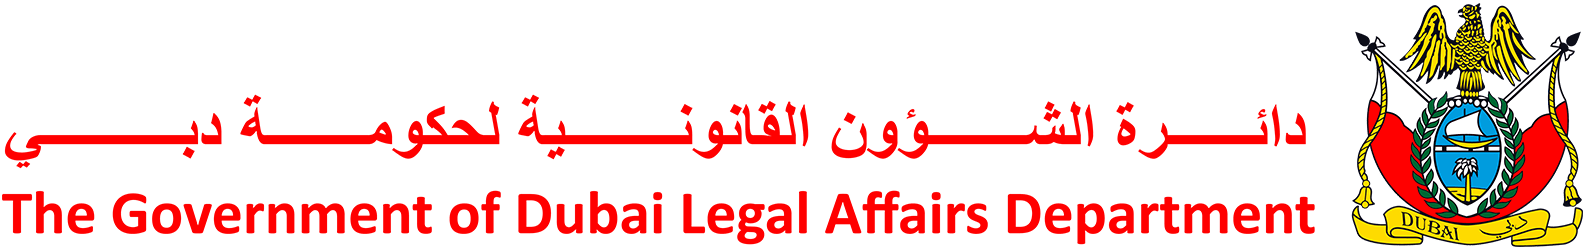 the government of dubai legal affairs department james berry and associates affiliation